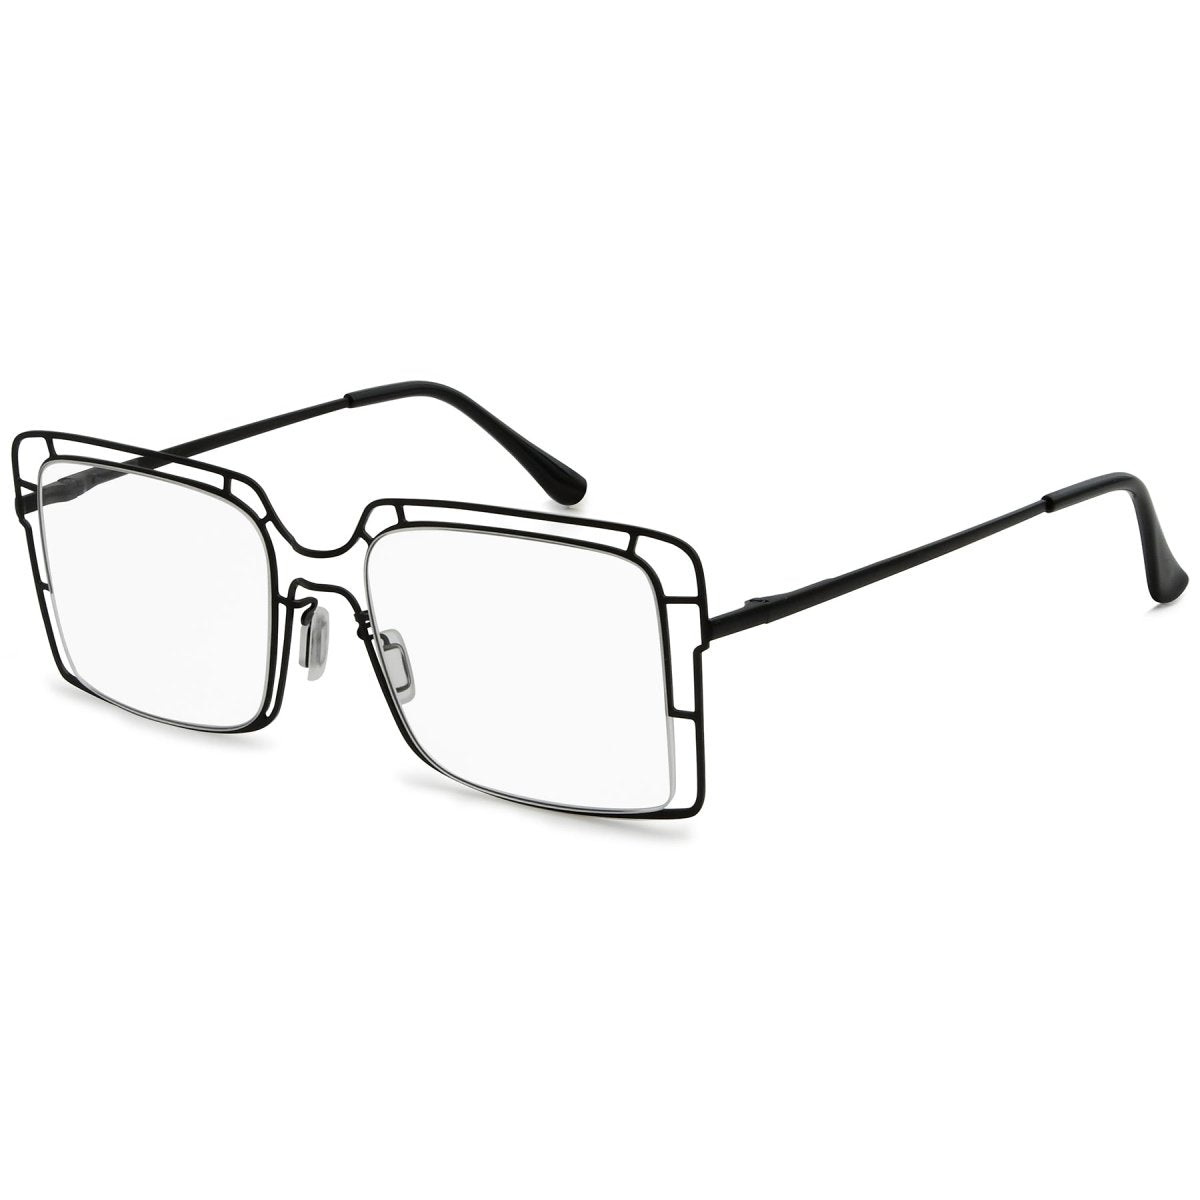 Thin Metal Hollow Frame Reading Glasses R2301eyekeeper.com